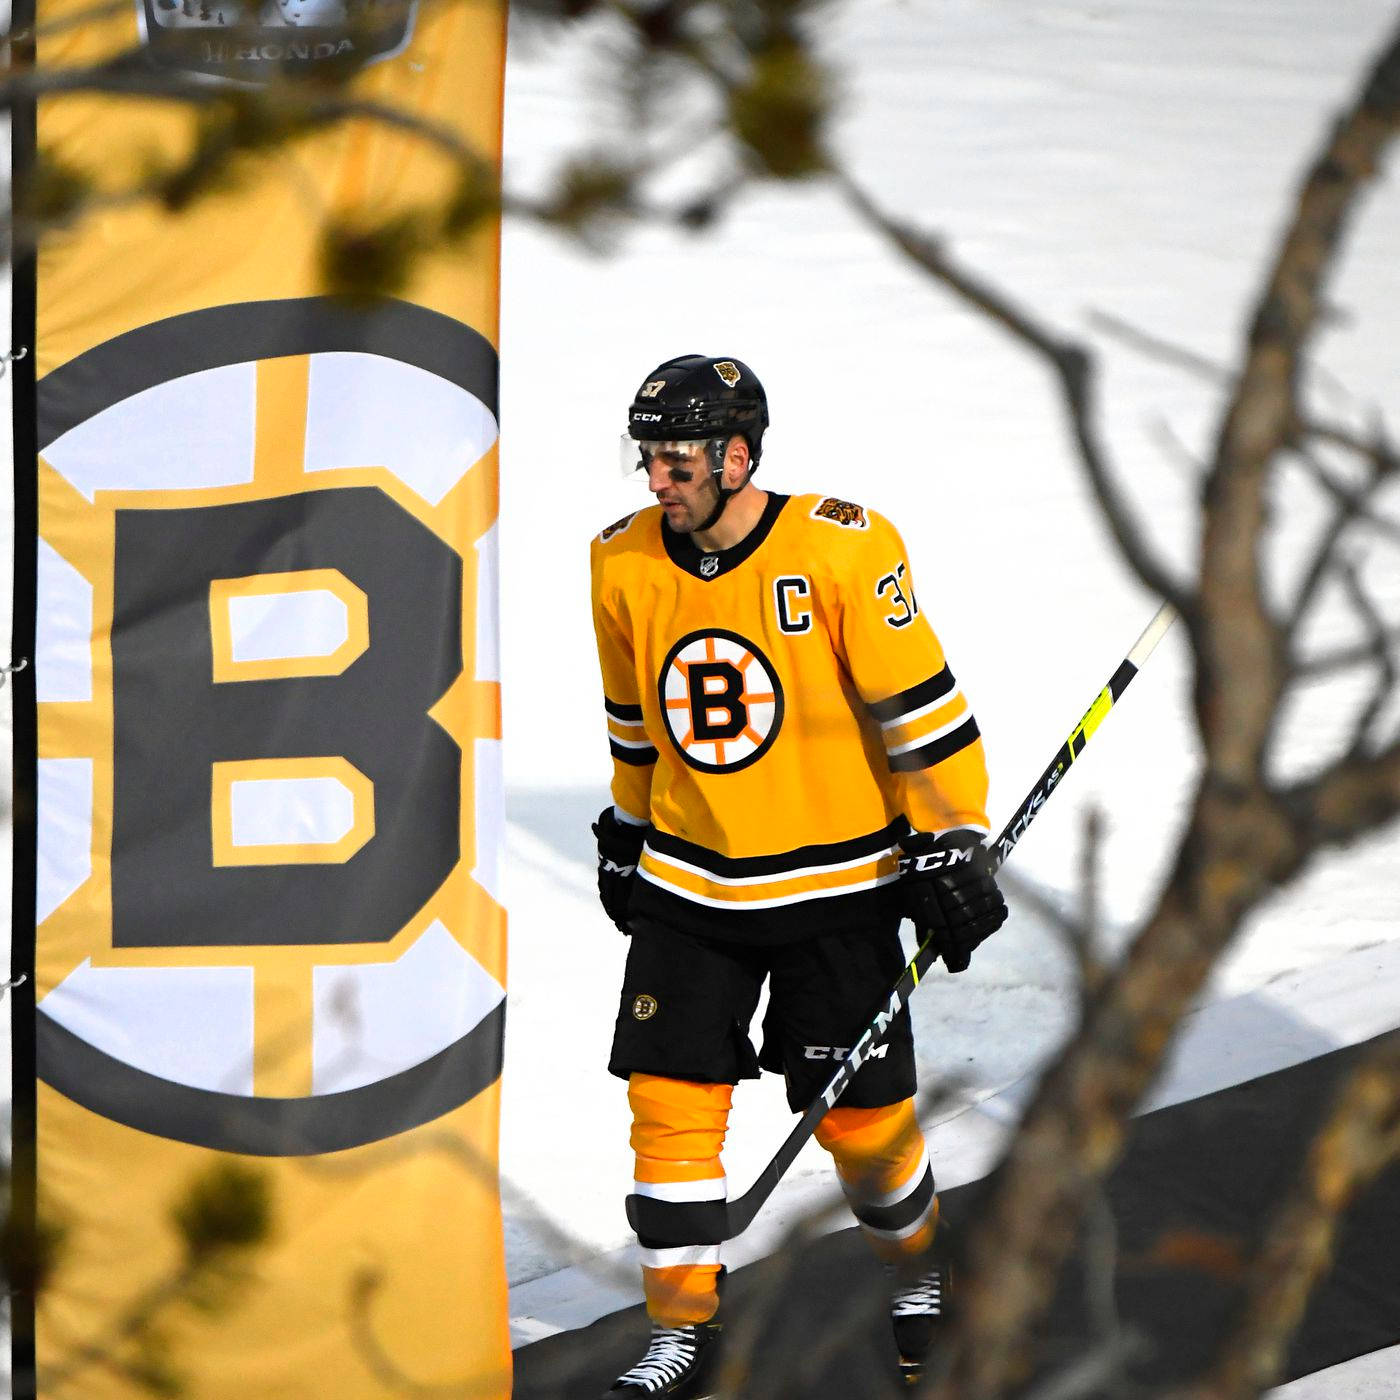 Boston Bruins' Star Player, Patrice Bergeron